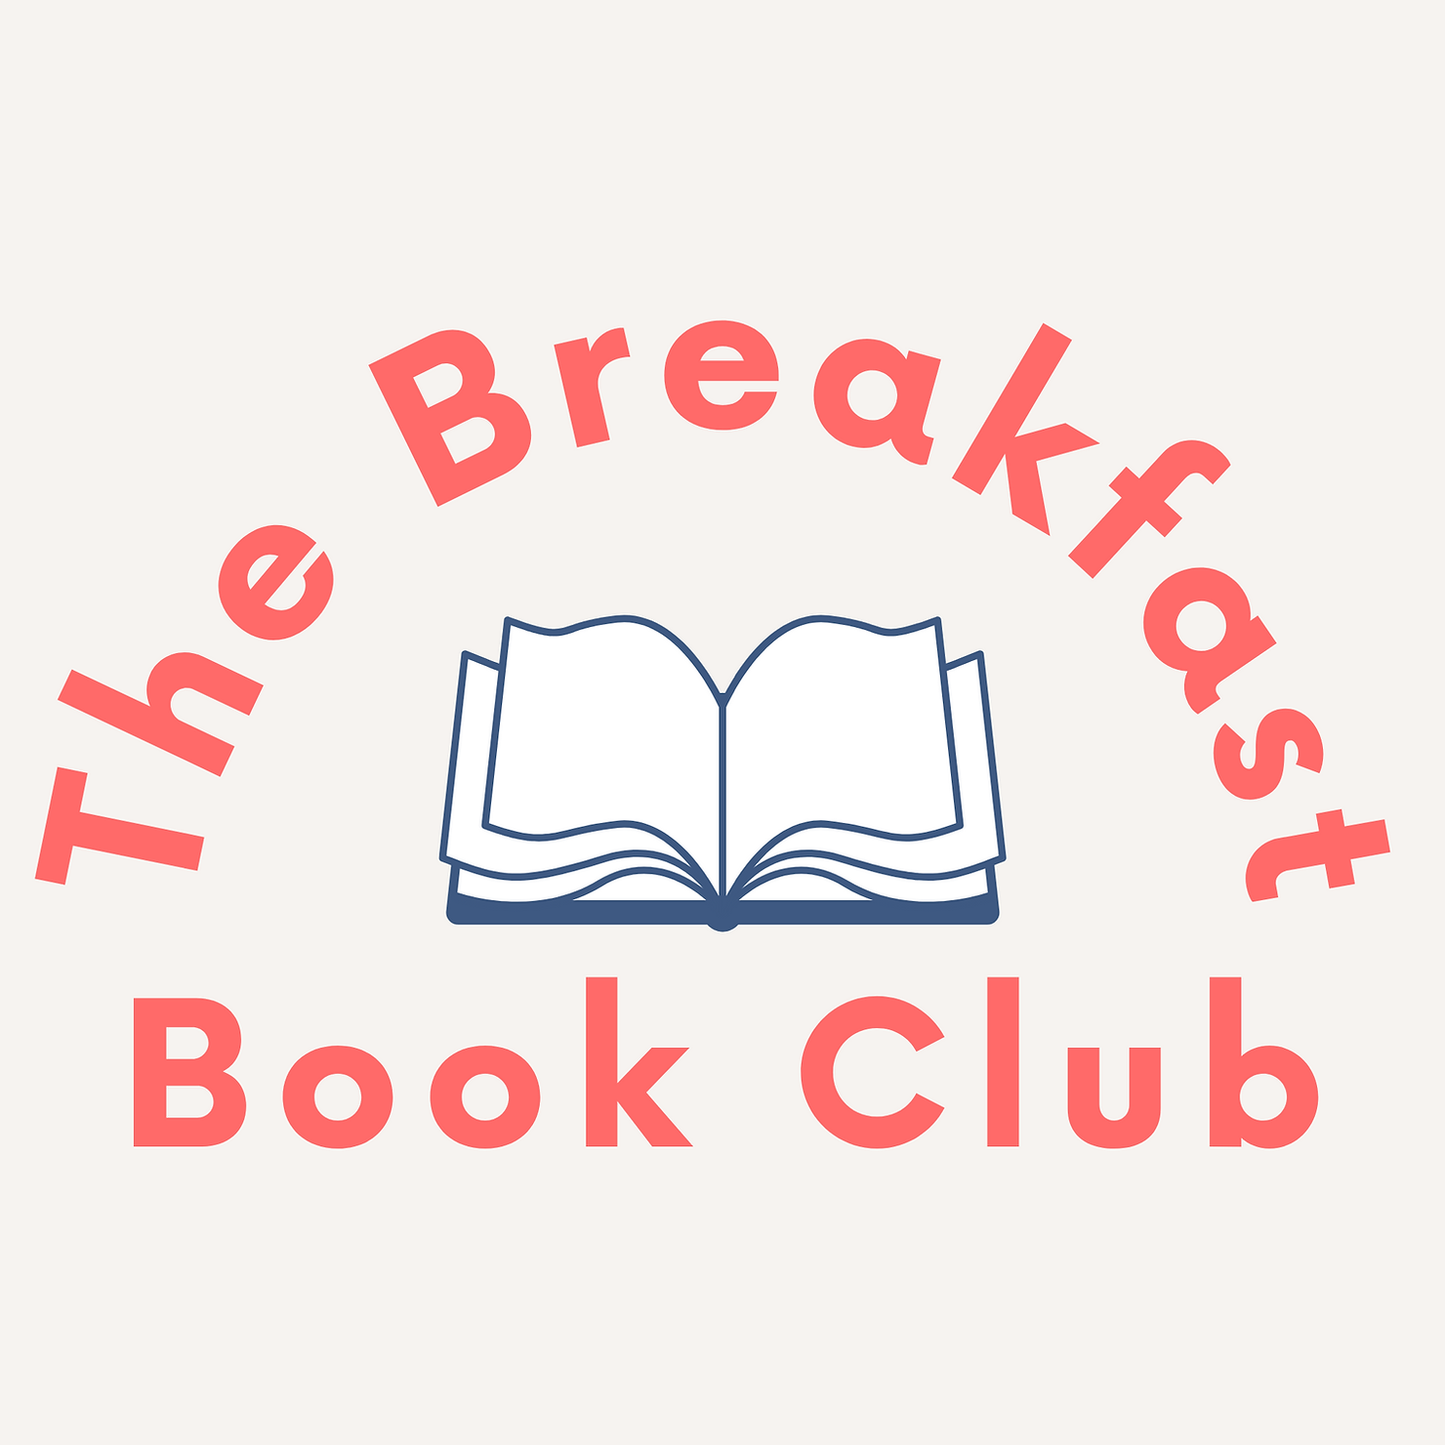 Monthly Book Club Membership